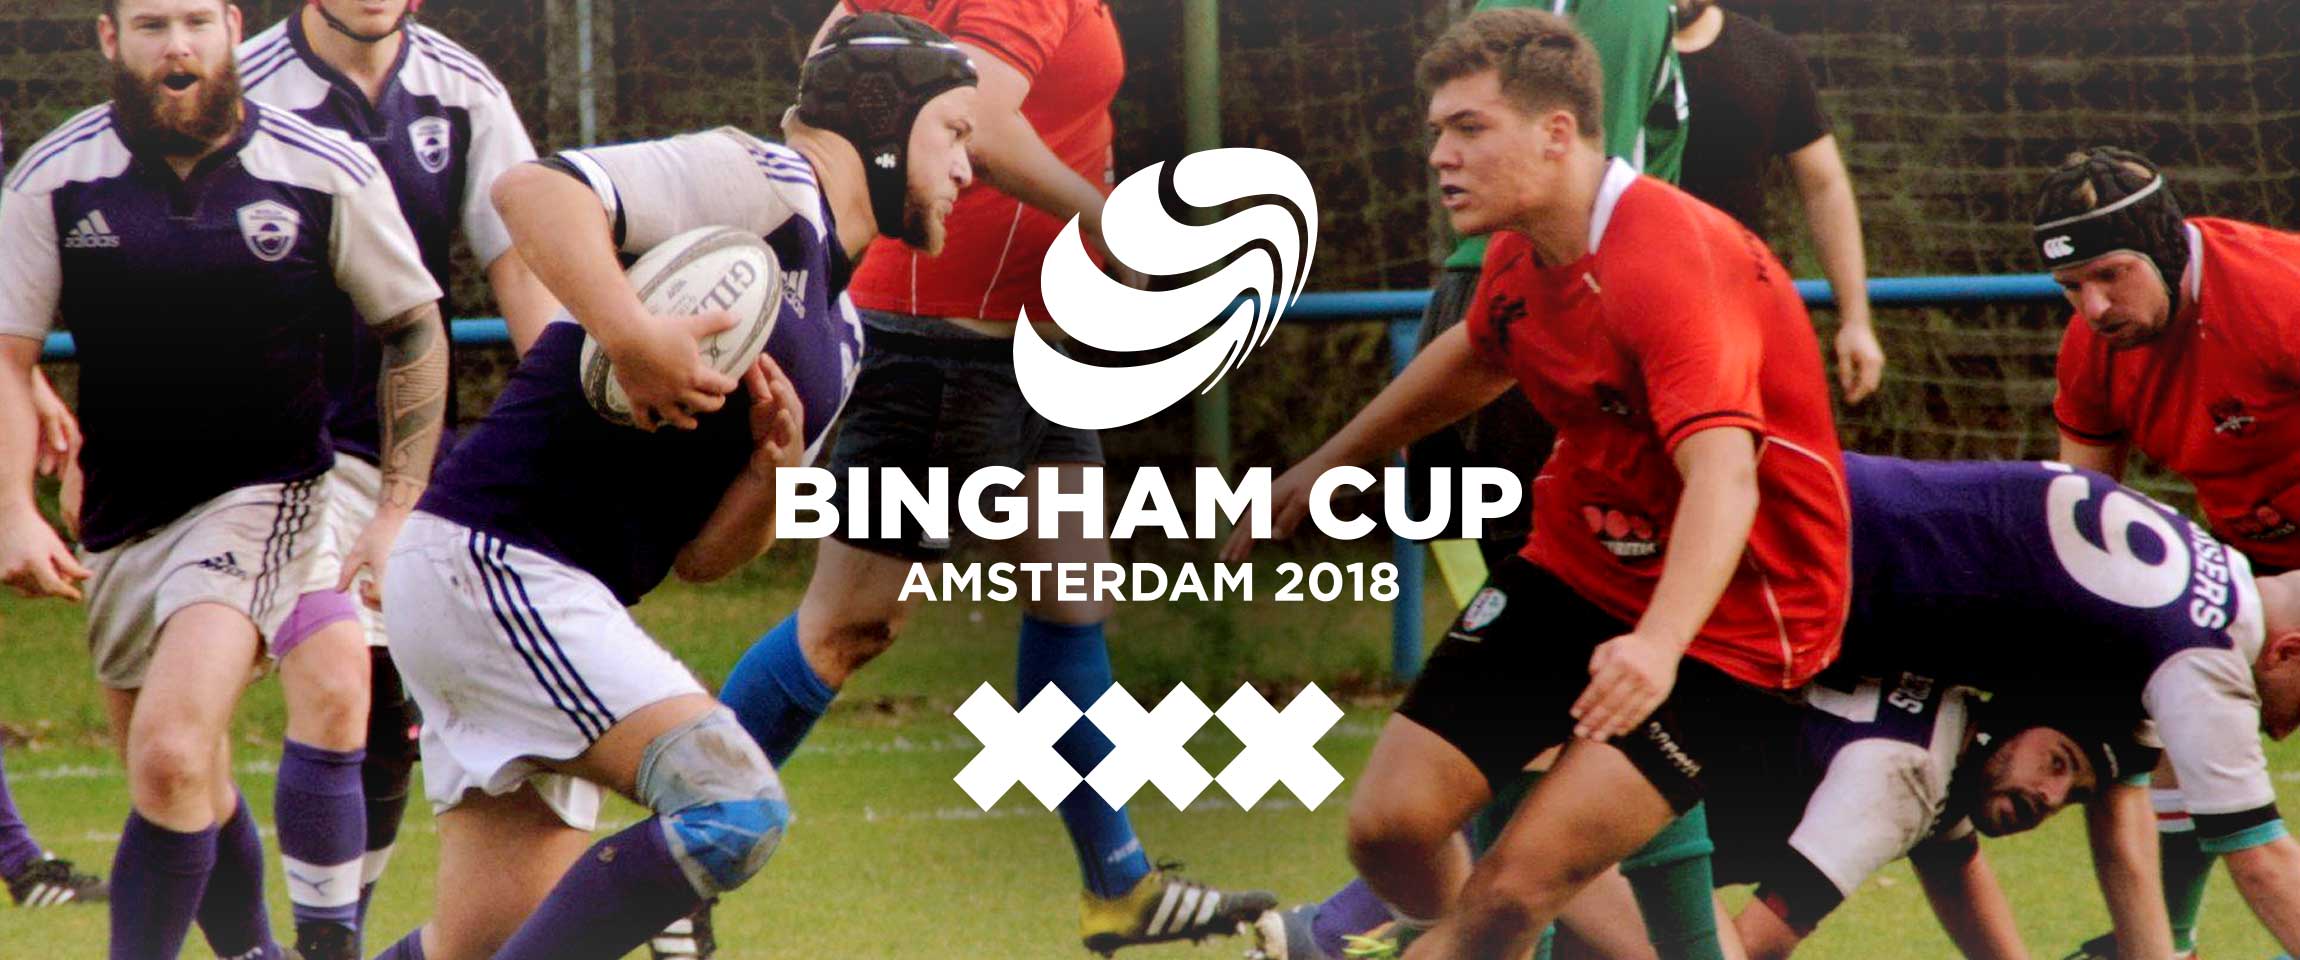 The Bingham cup 2018